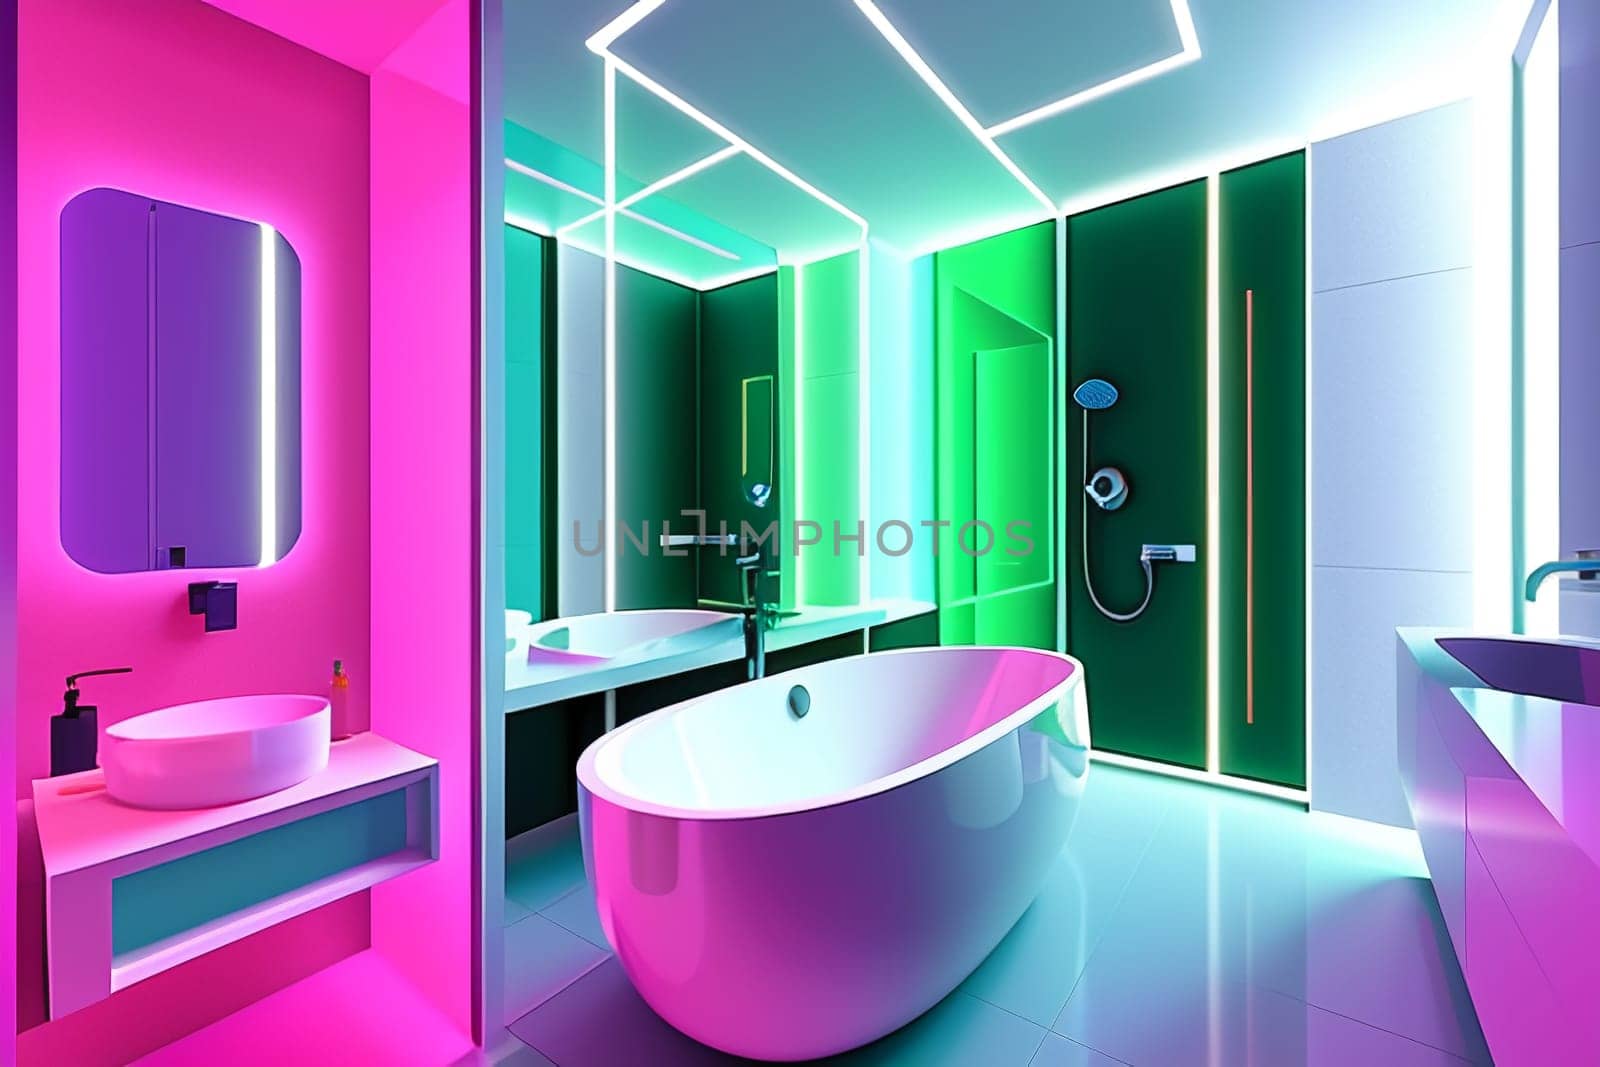 The interior of a modern futuristic bathroom in bright colors. by Annu1tochka